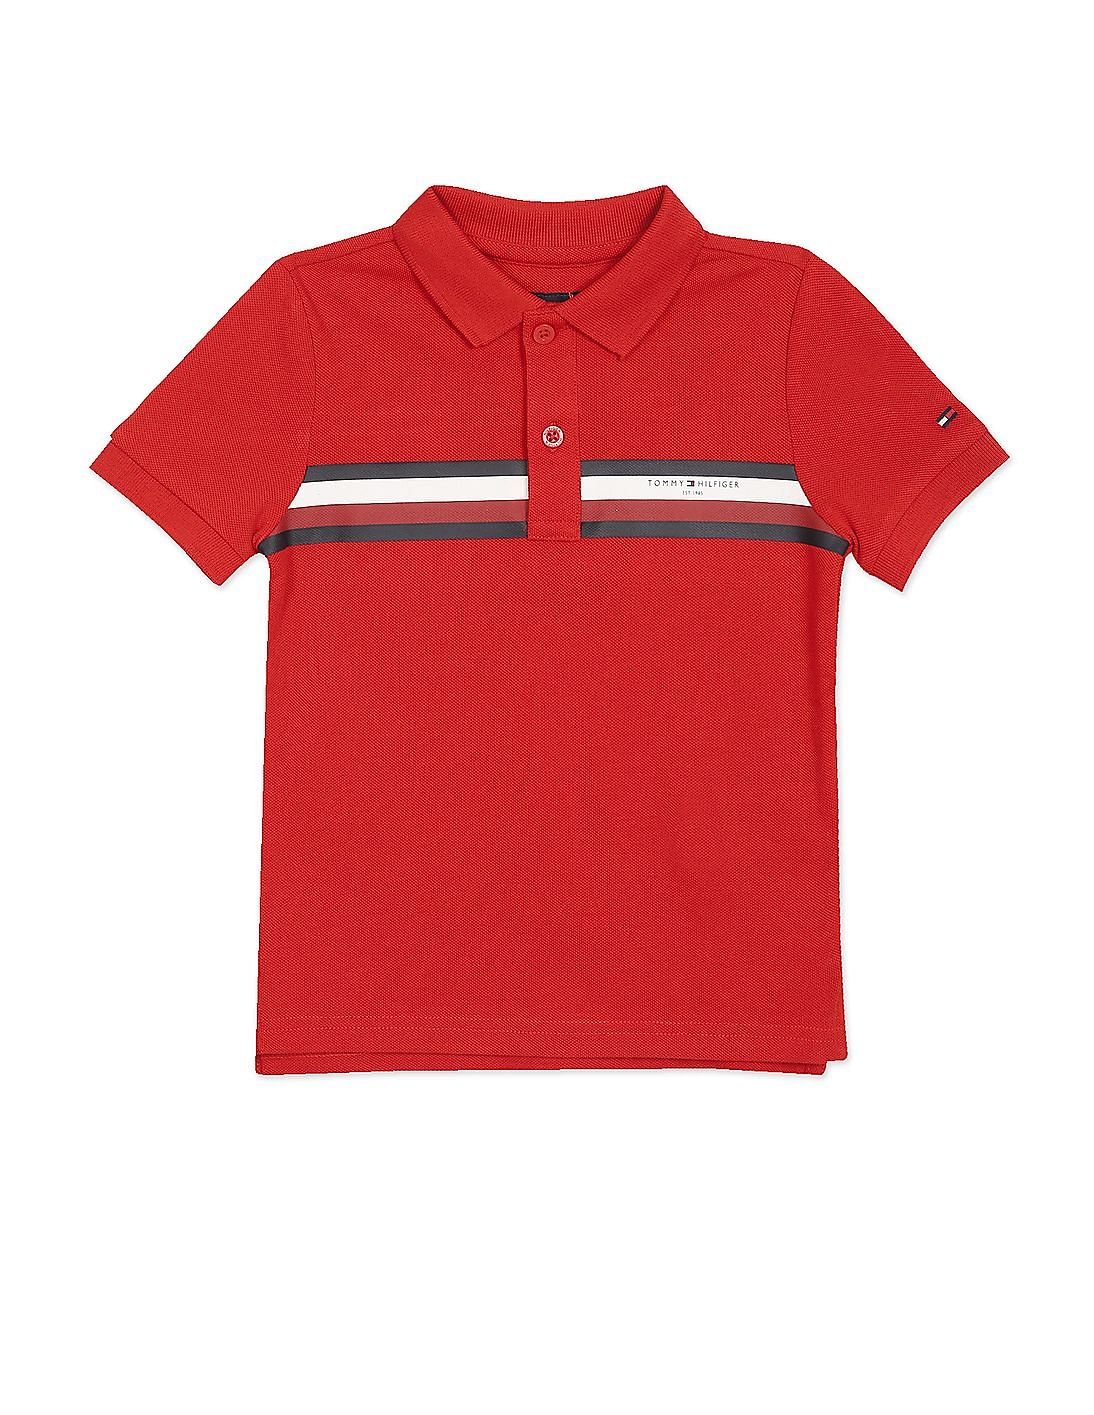 Buy Tommy Hilfiger Kids Boys Red Pique Global Stripe Polo Shirt - NNNOW.com